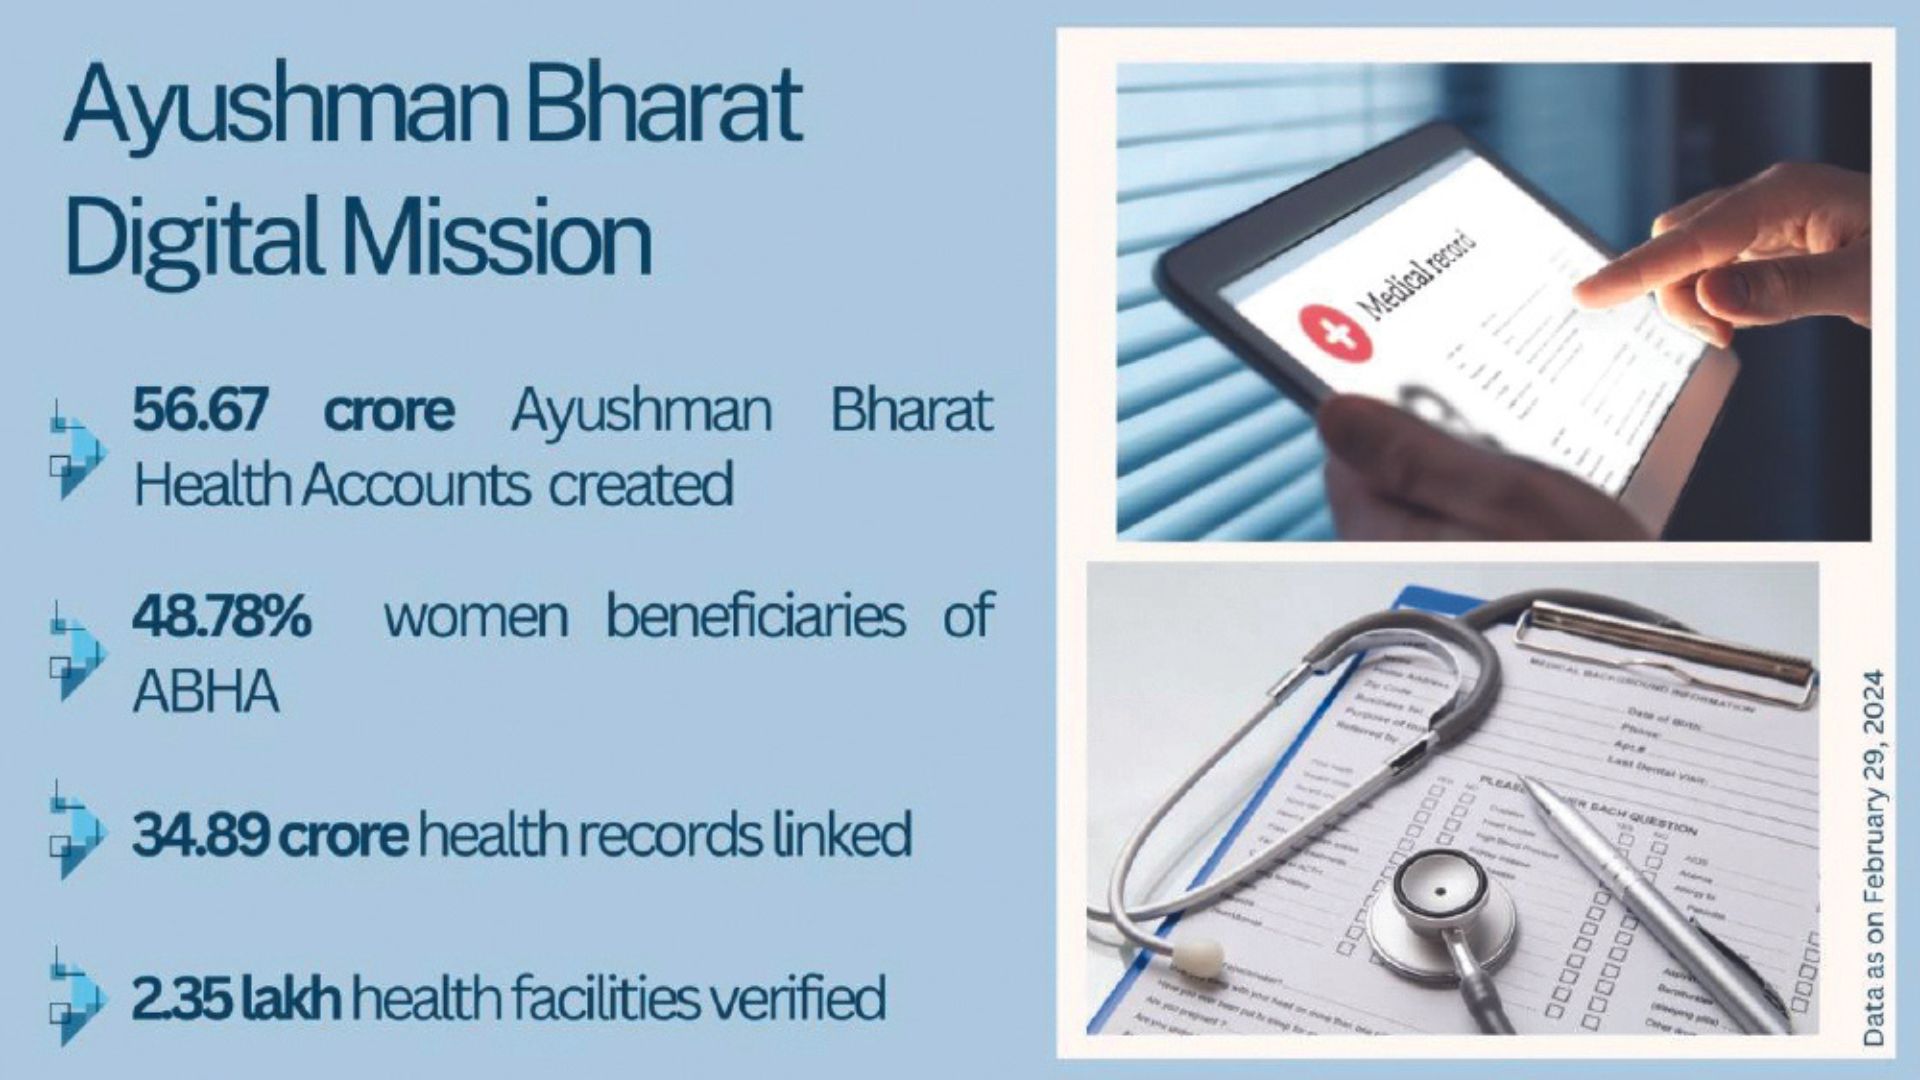 Over 56 crore Ayushman Bharat Health Accounts created